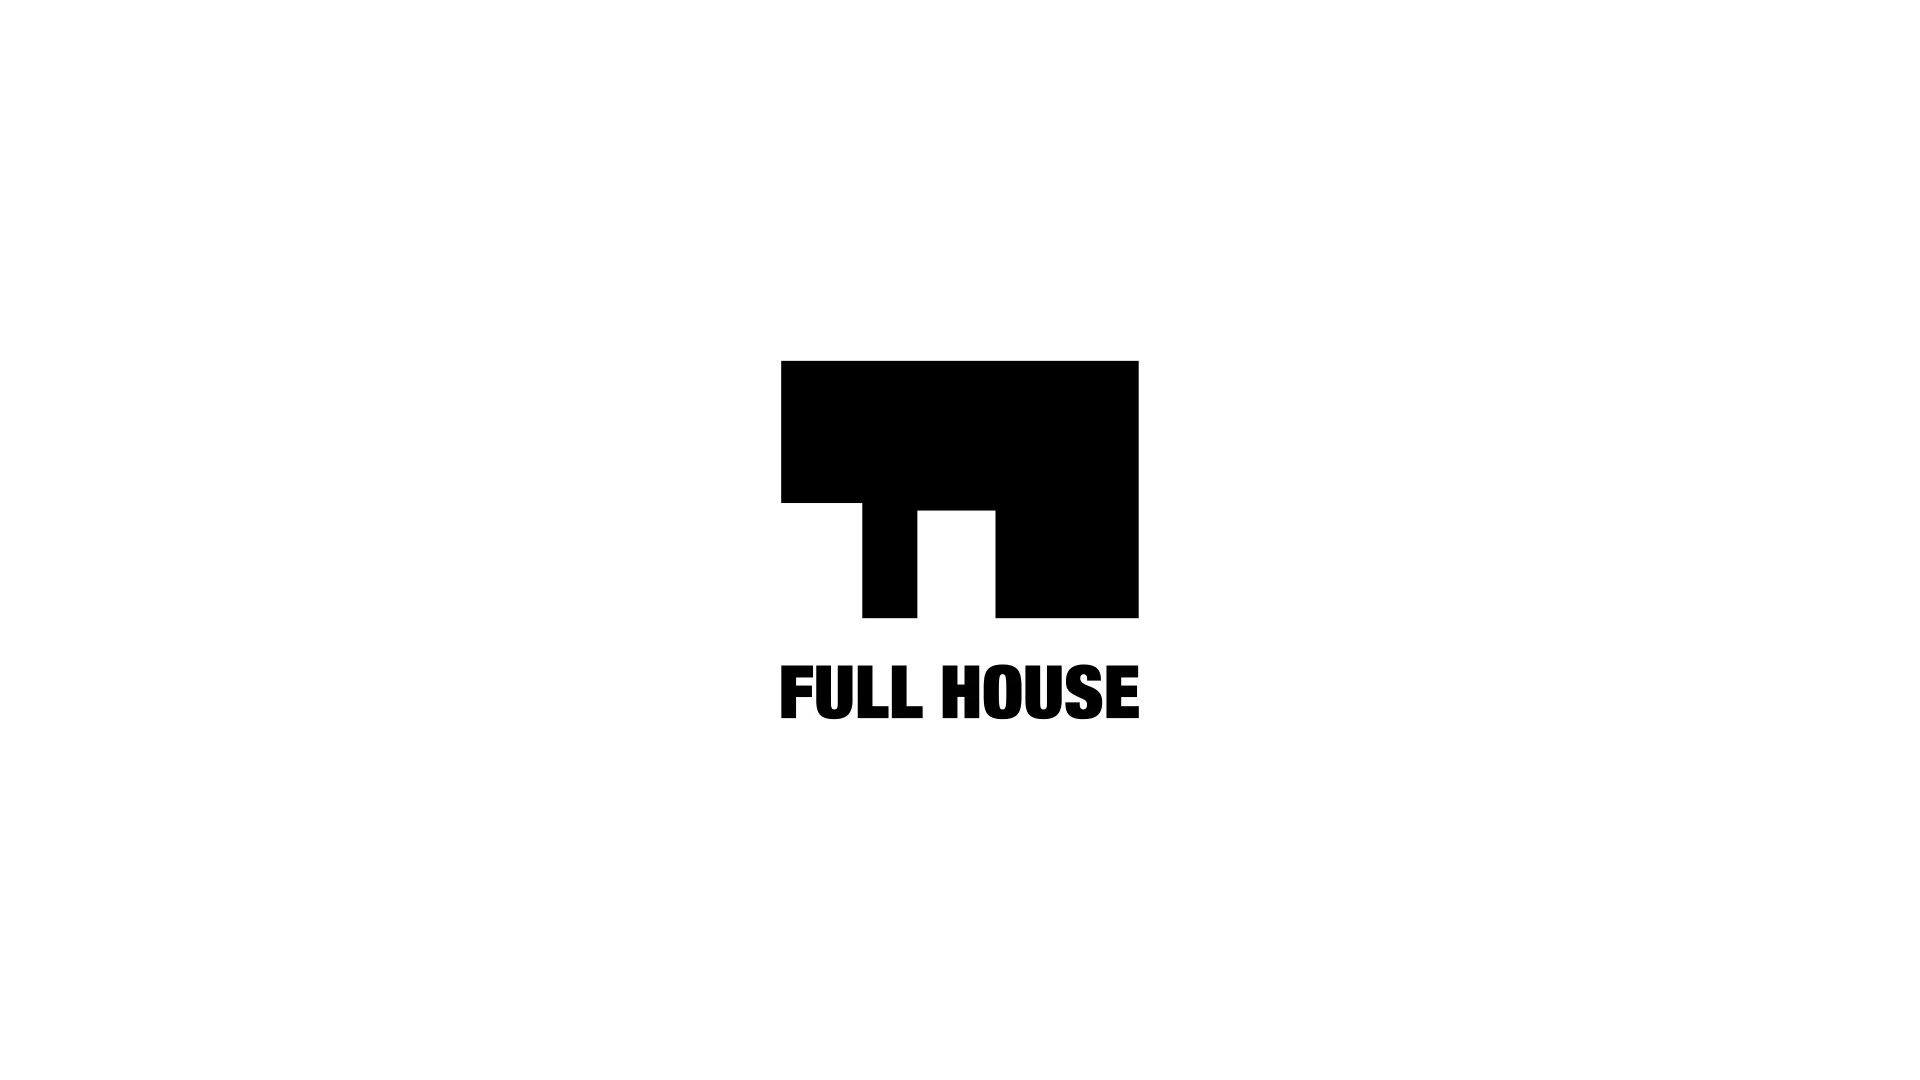 Full House лого. House brand логотип. Теч Хаус логотипы. ЖК Full House лого.